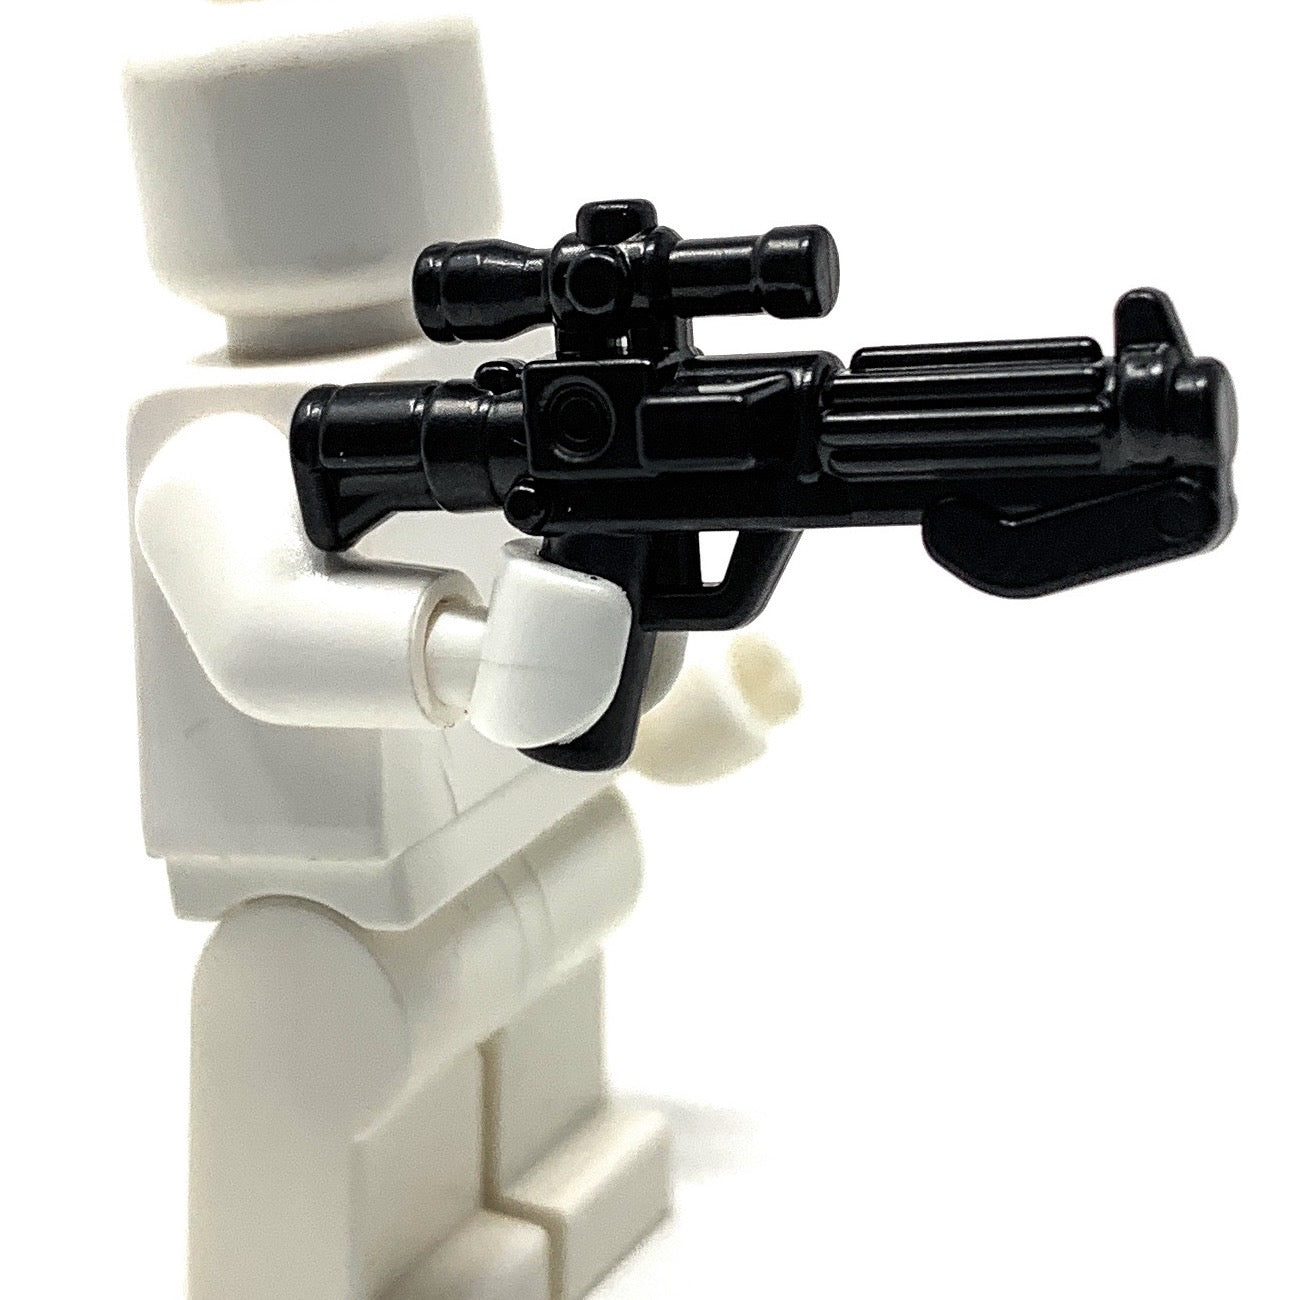 F-11D Blast Carbine for LEGO Minifigures, BrickArms – The Brick Show Shop